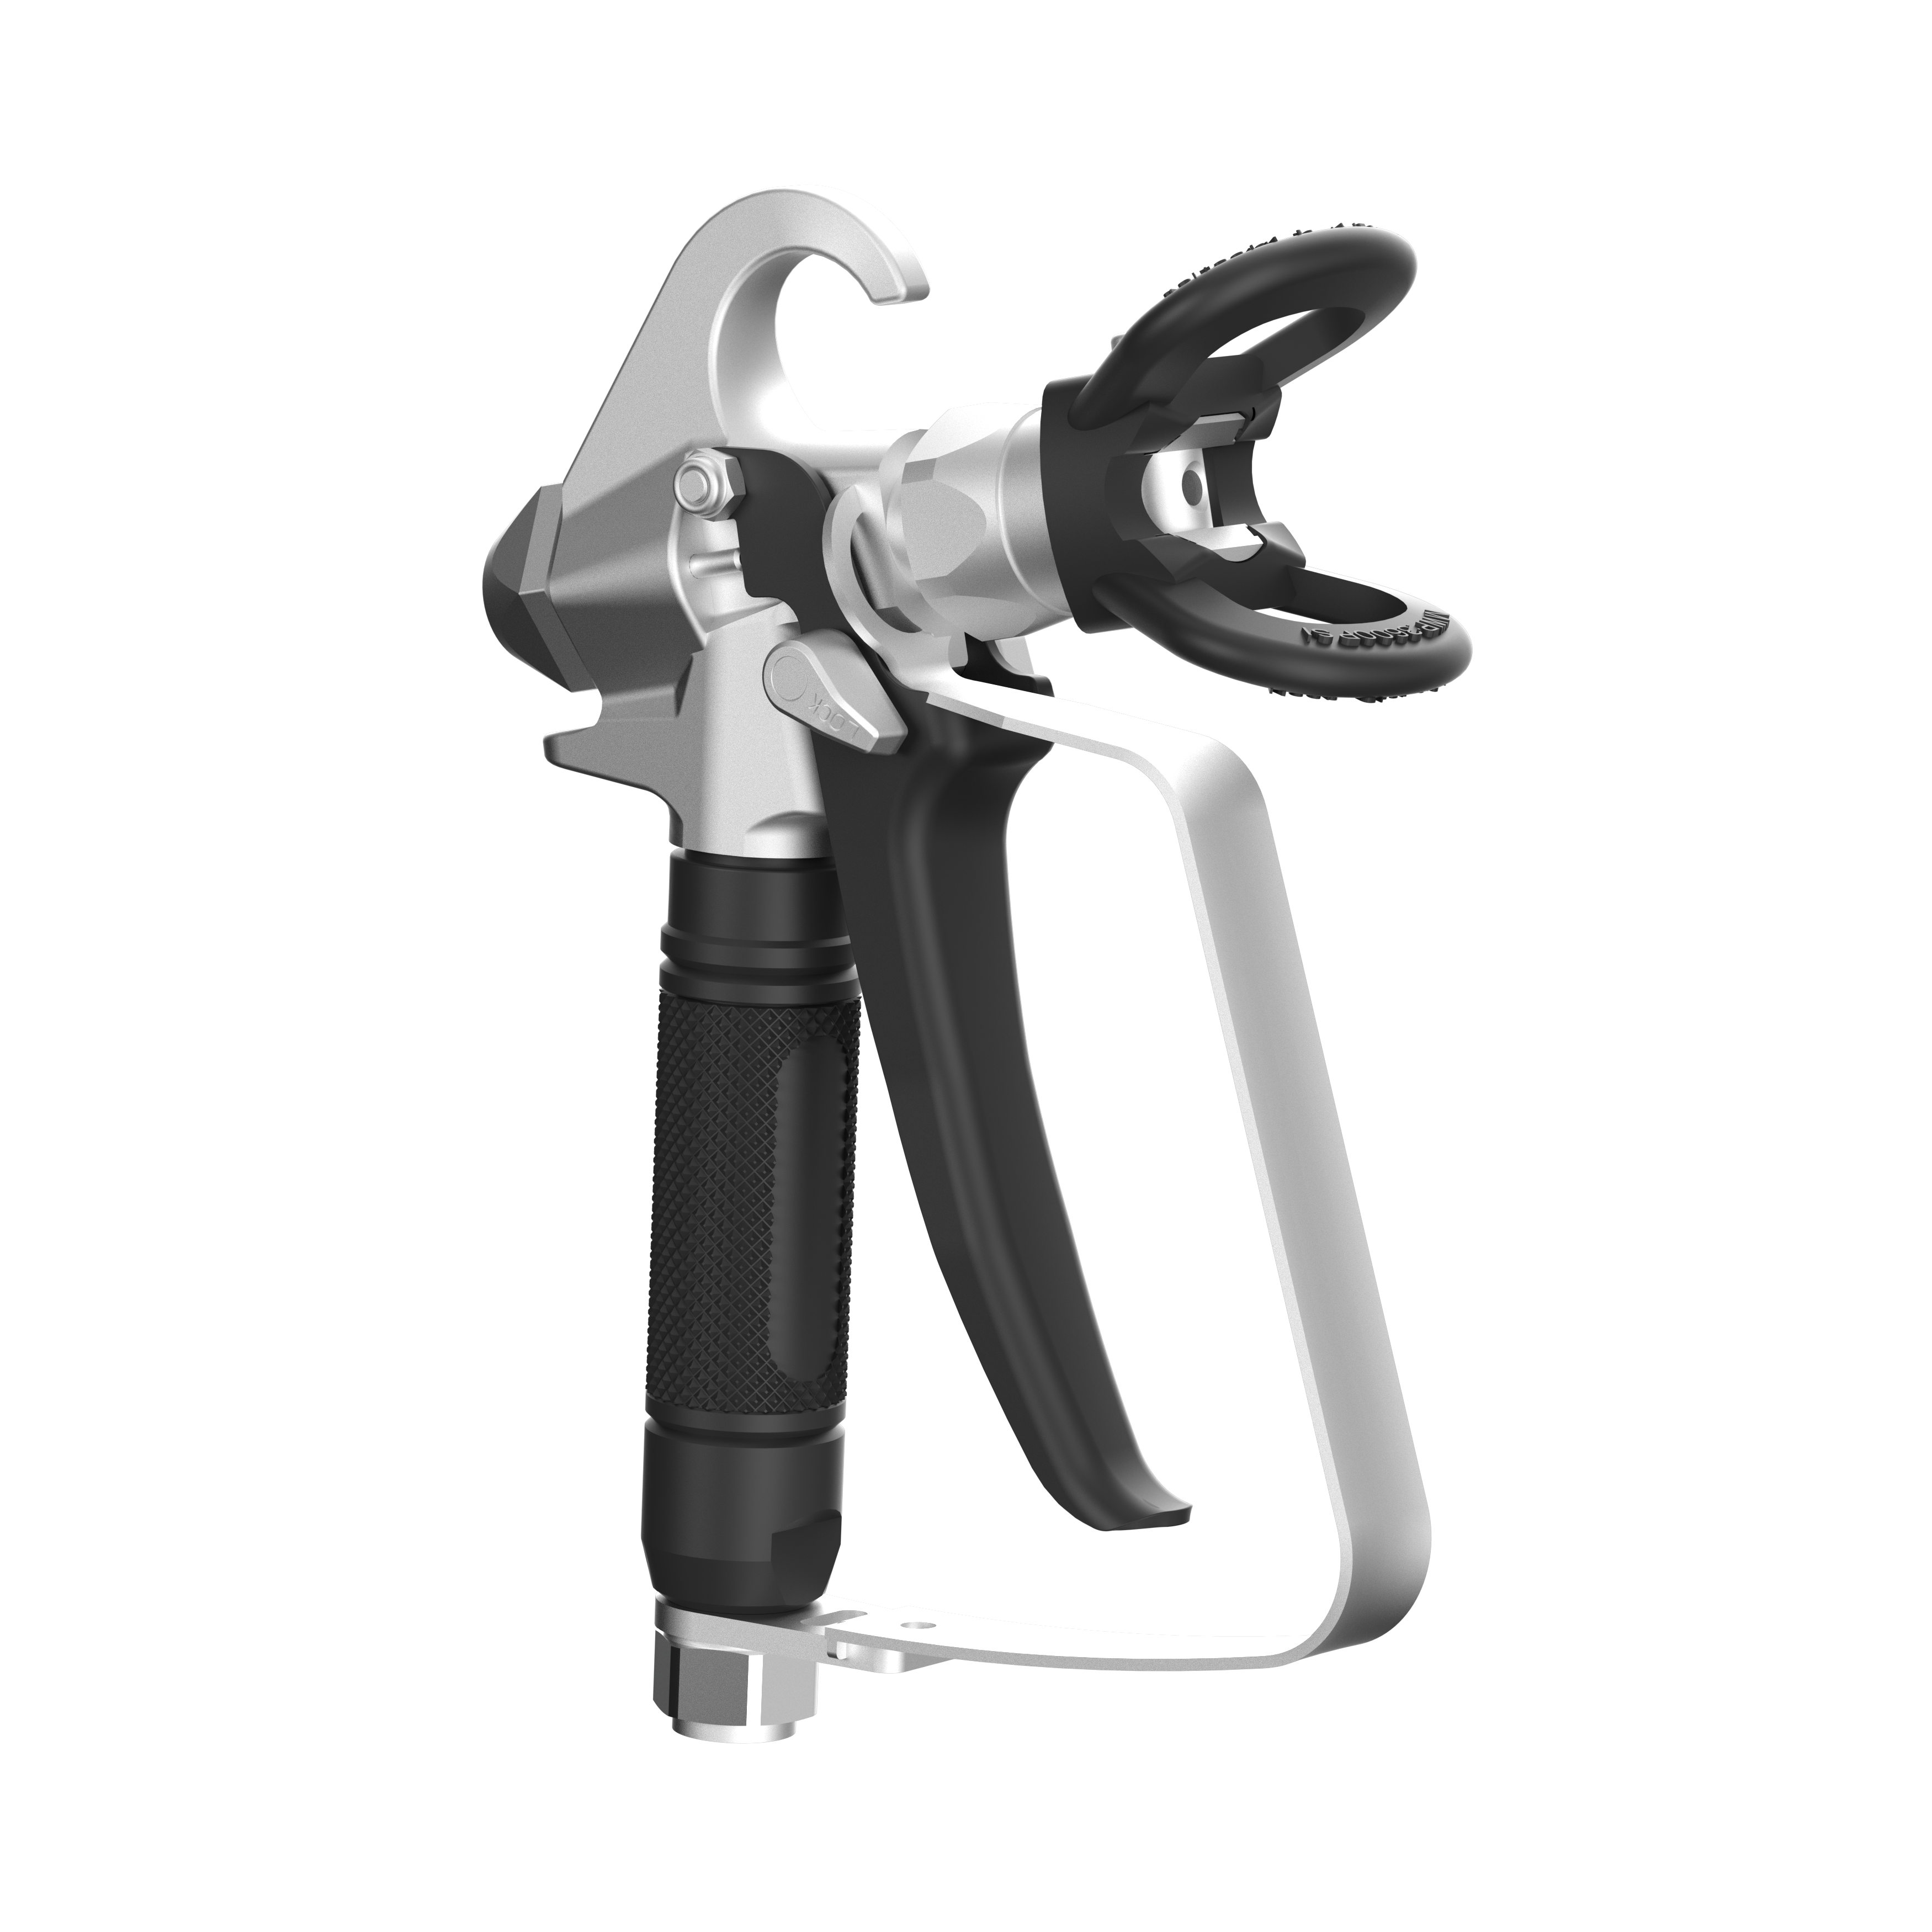 InoKraft Drzzle D1-LVLP Spray Gun Premium Kit for Cars & House DIY Painting